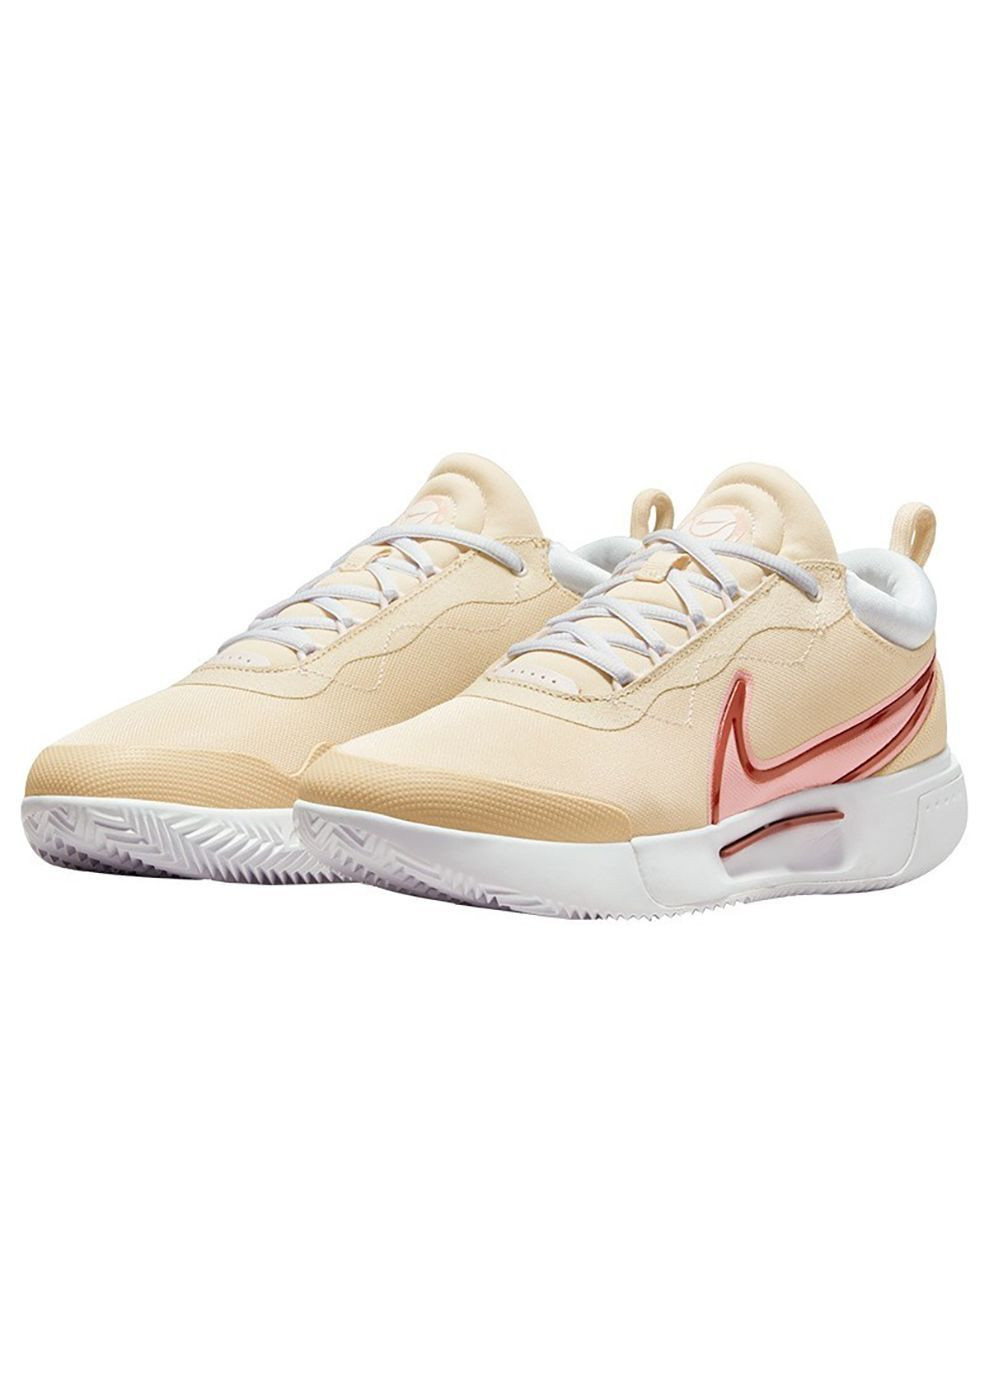 Білі осінні кросівки жін. zoom court pro cly grey 8.5 dh2604-261 40 Nike